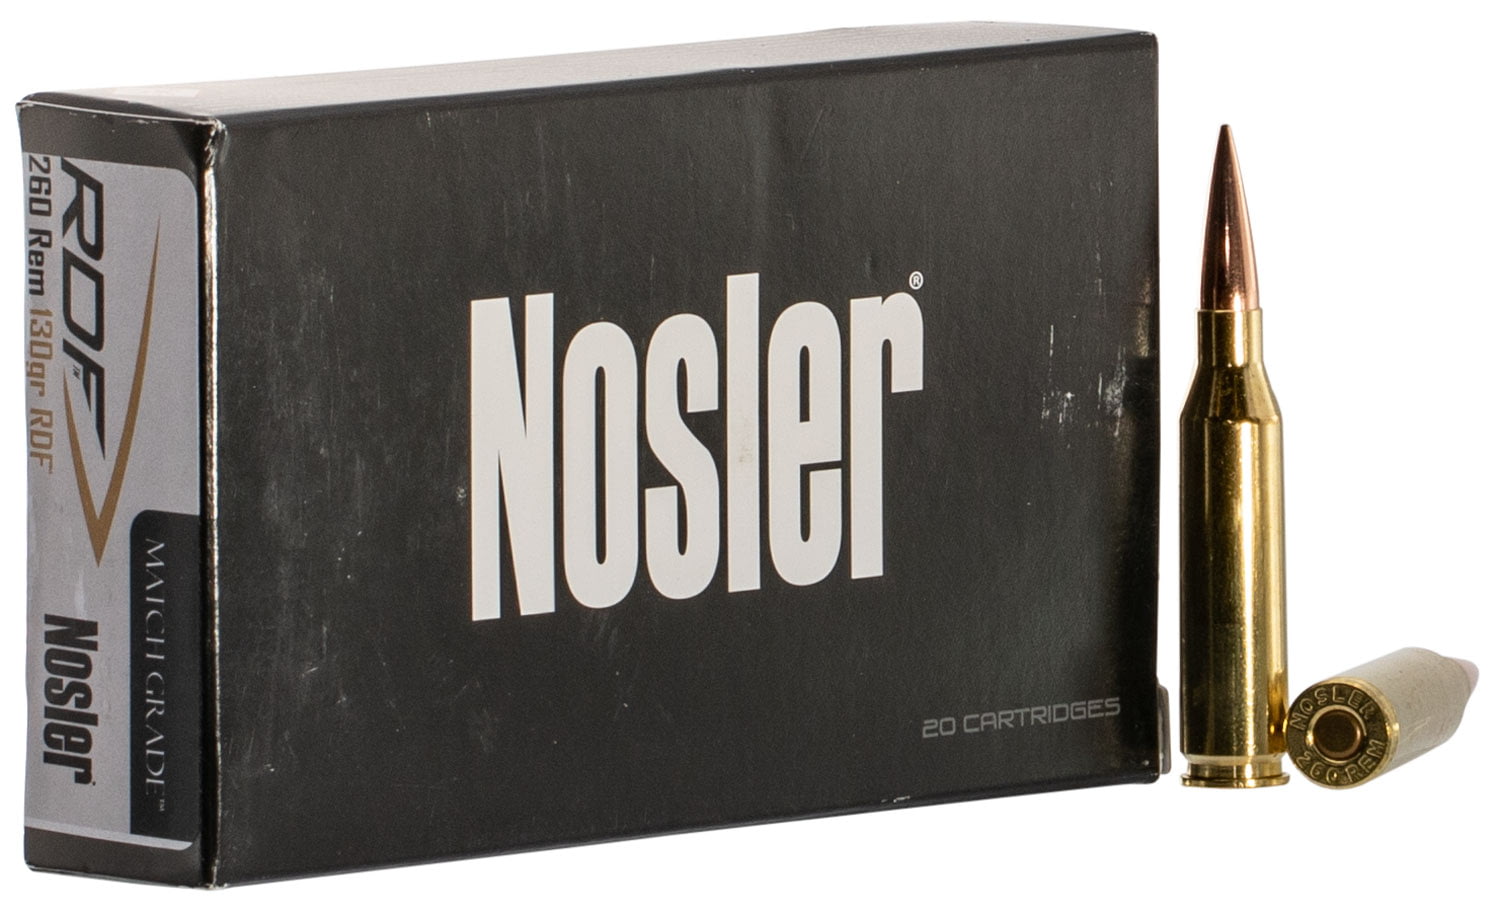 Nosler .260 Remington Round Nose Flat 130 grain Brass Cased Rifle Ammunition